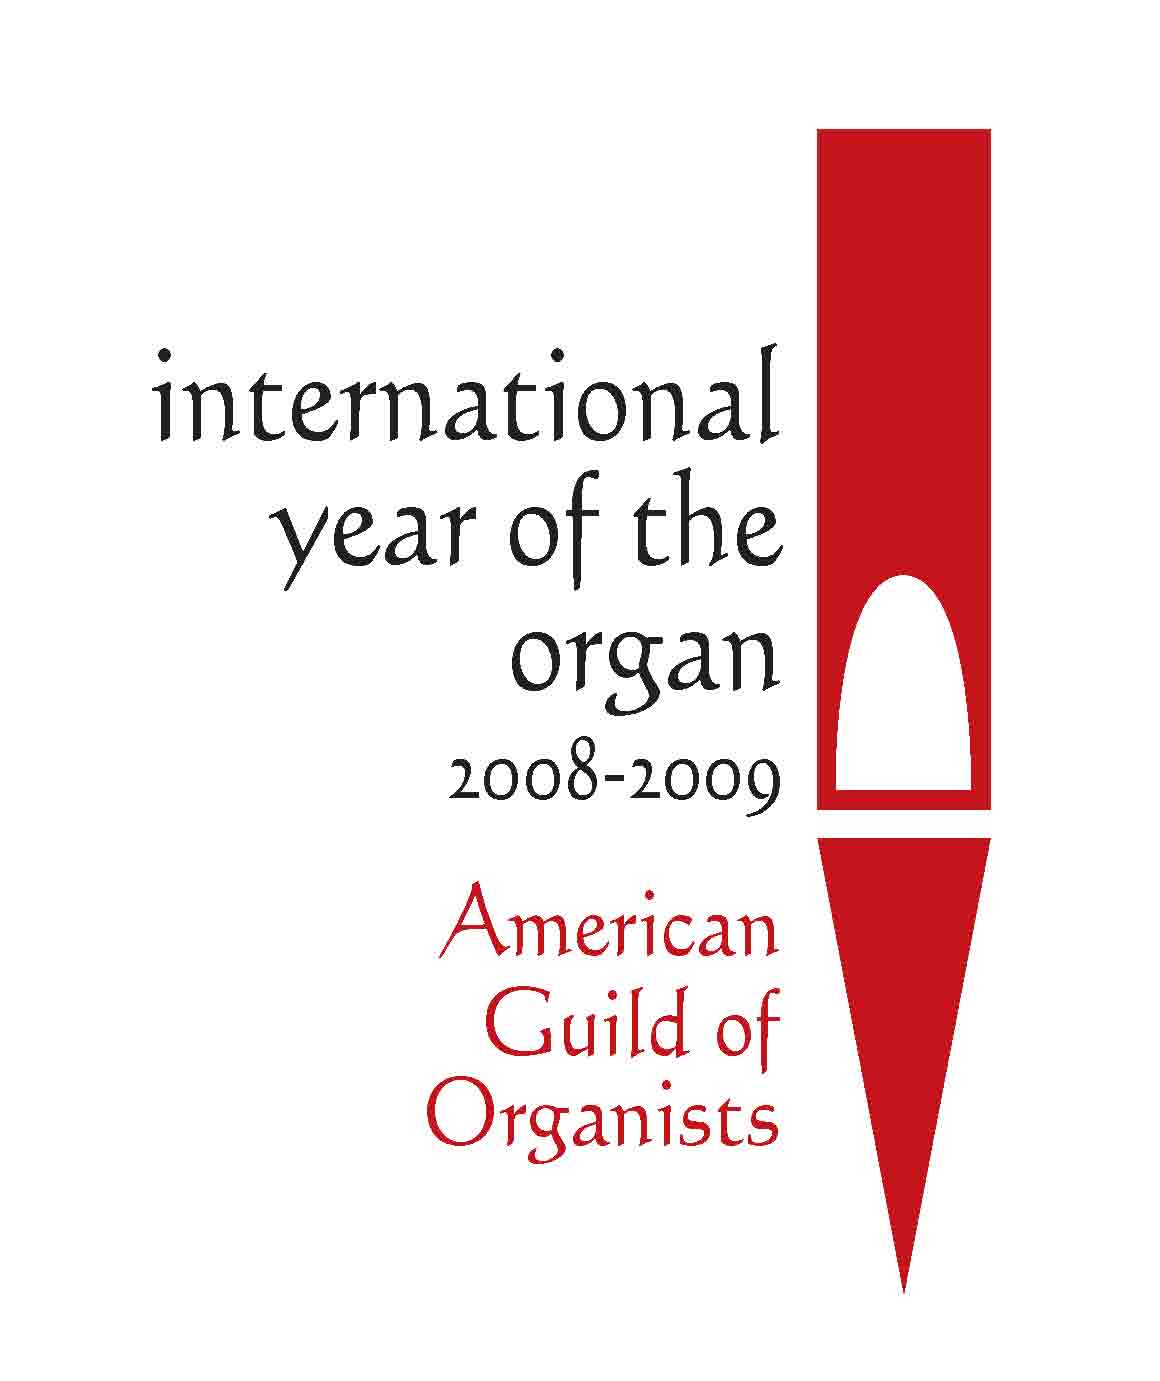 International year of the organ